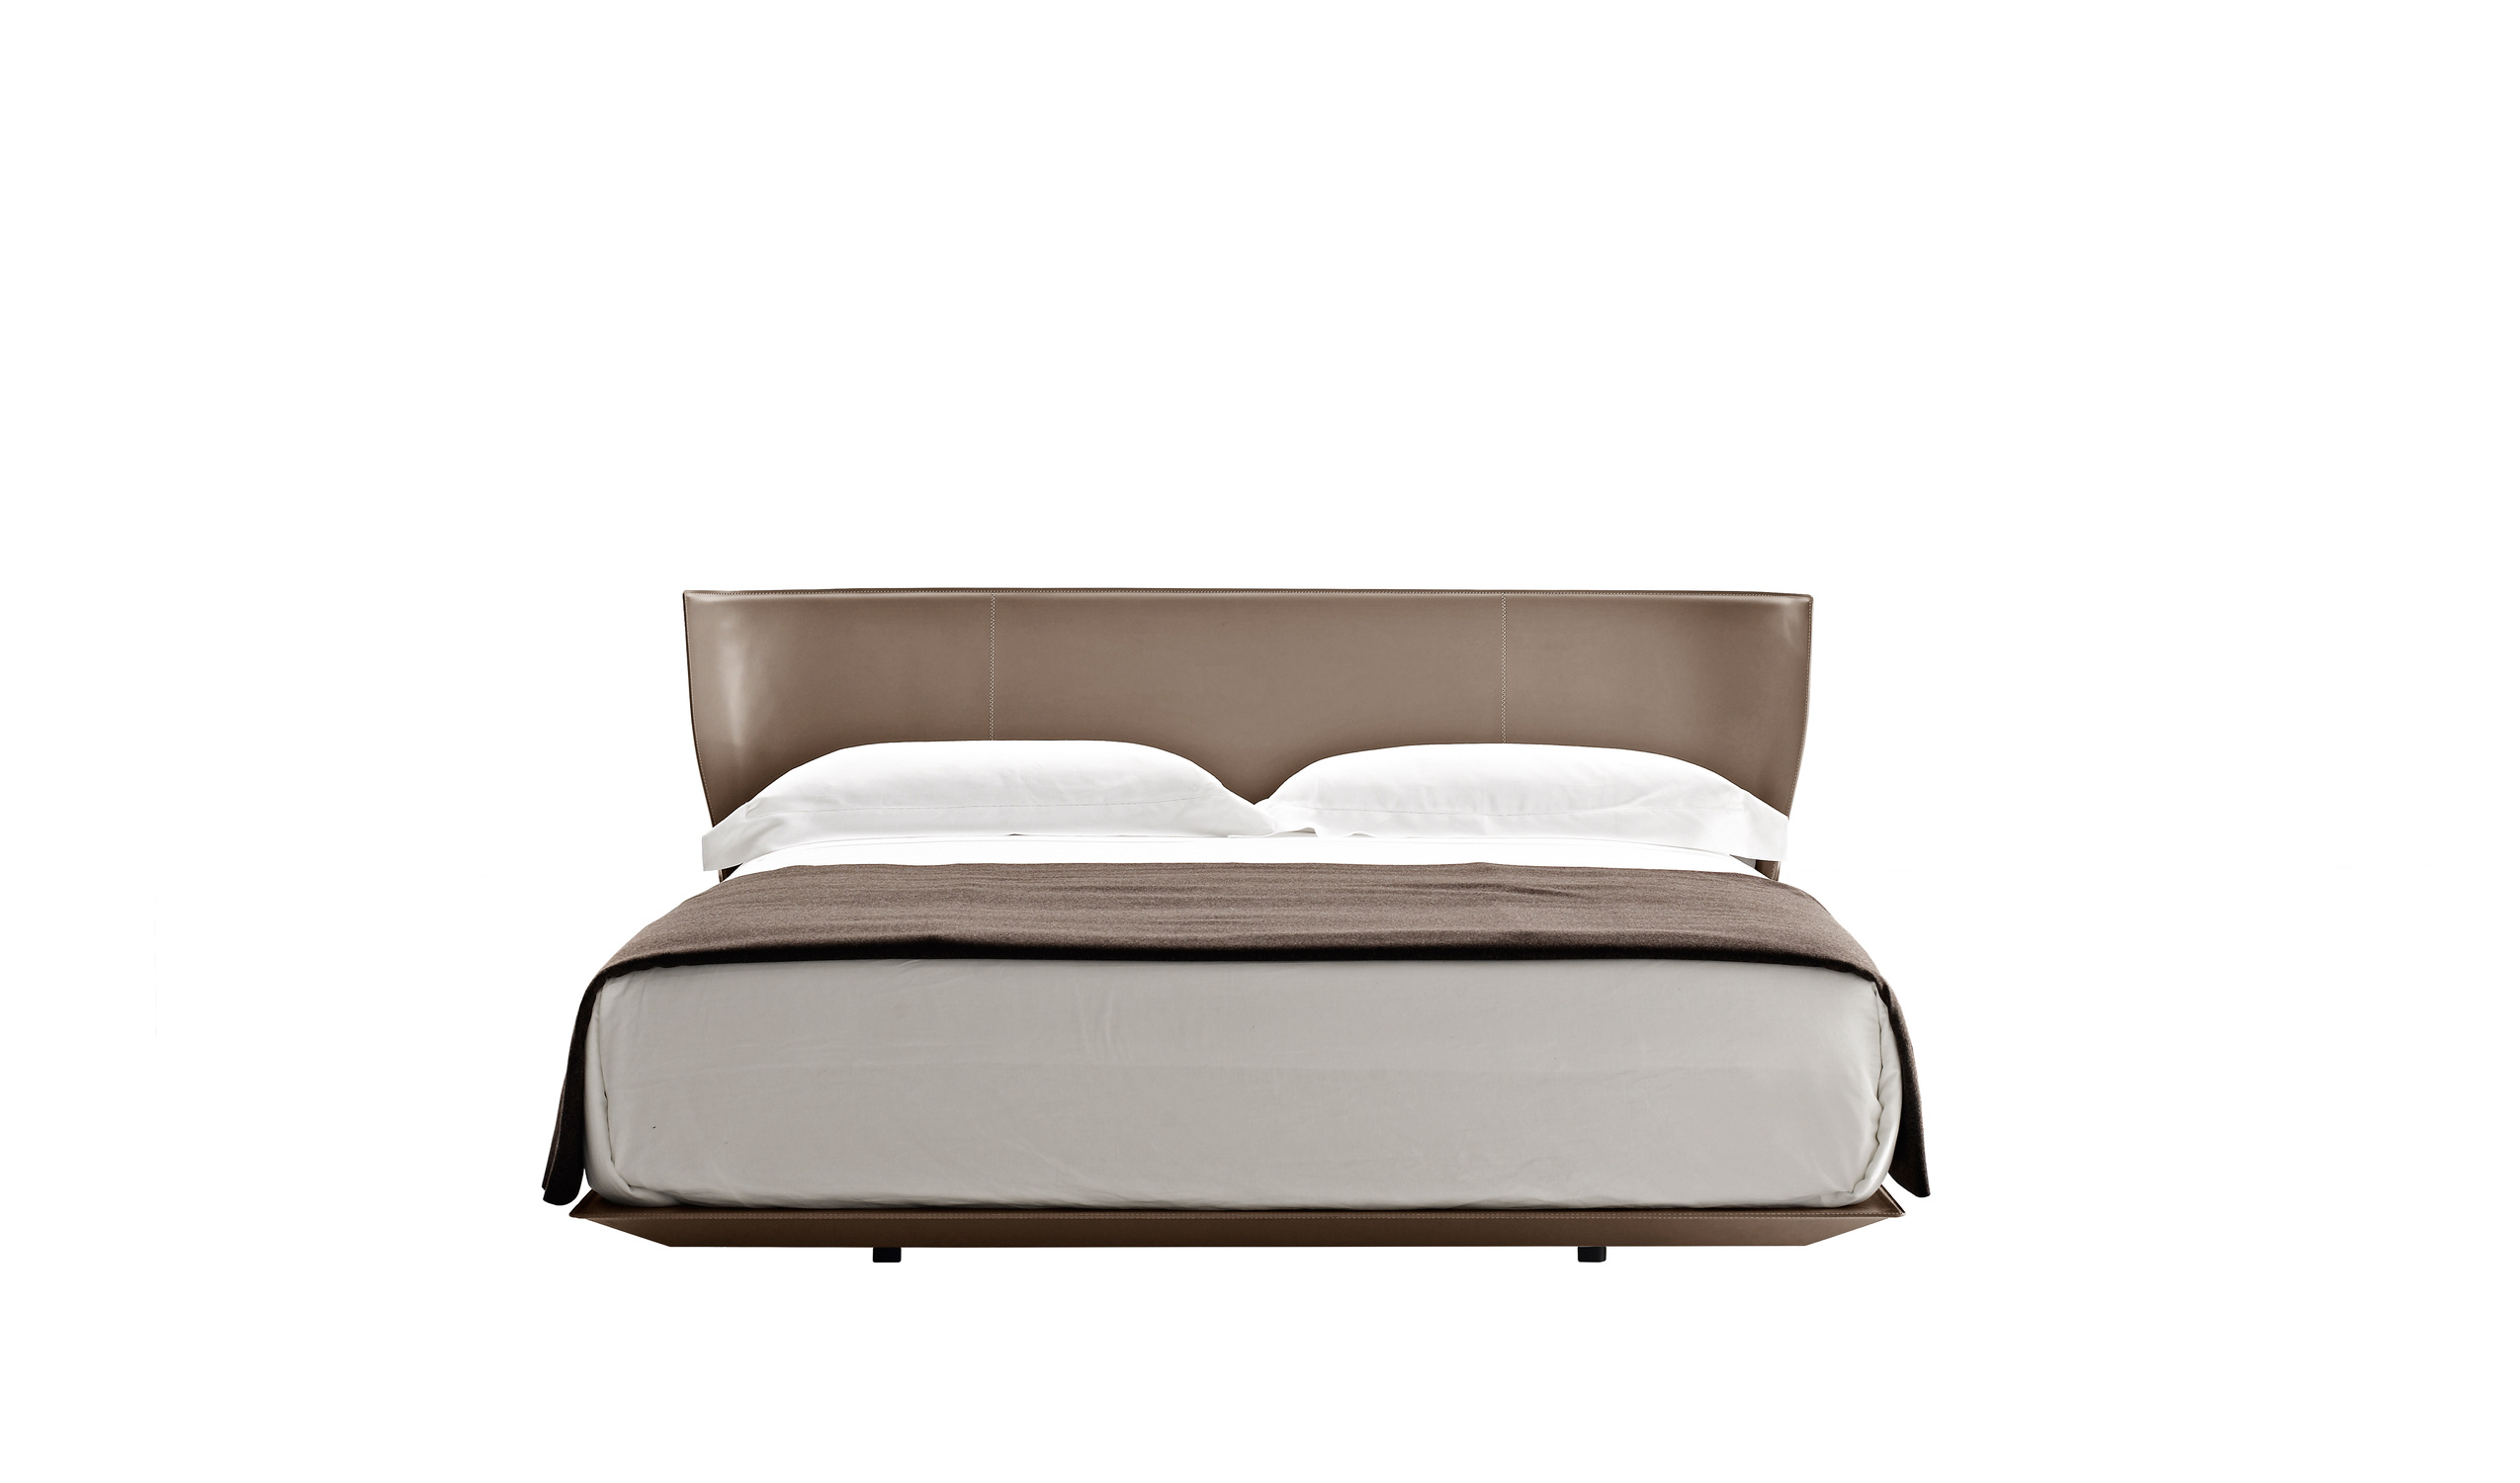 Designer Italian modern beds - Alys Beds